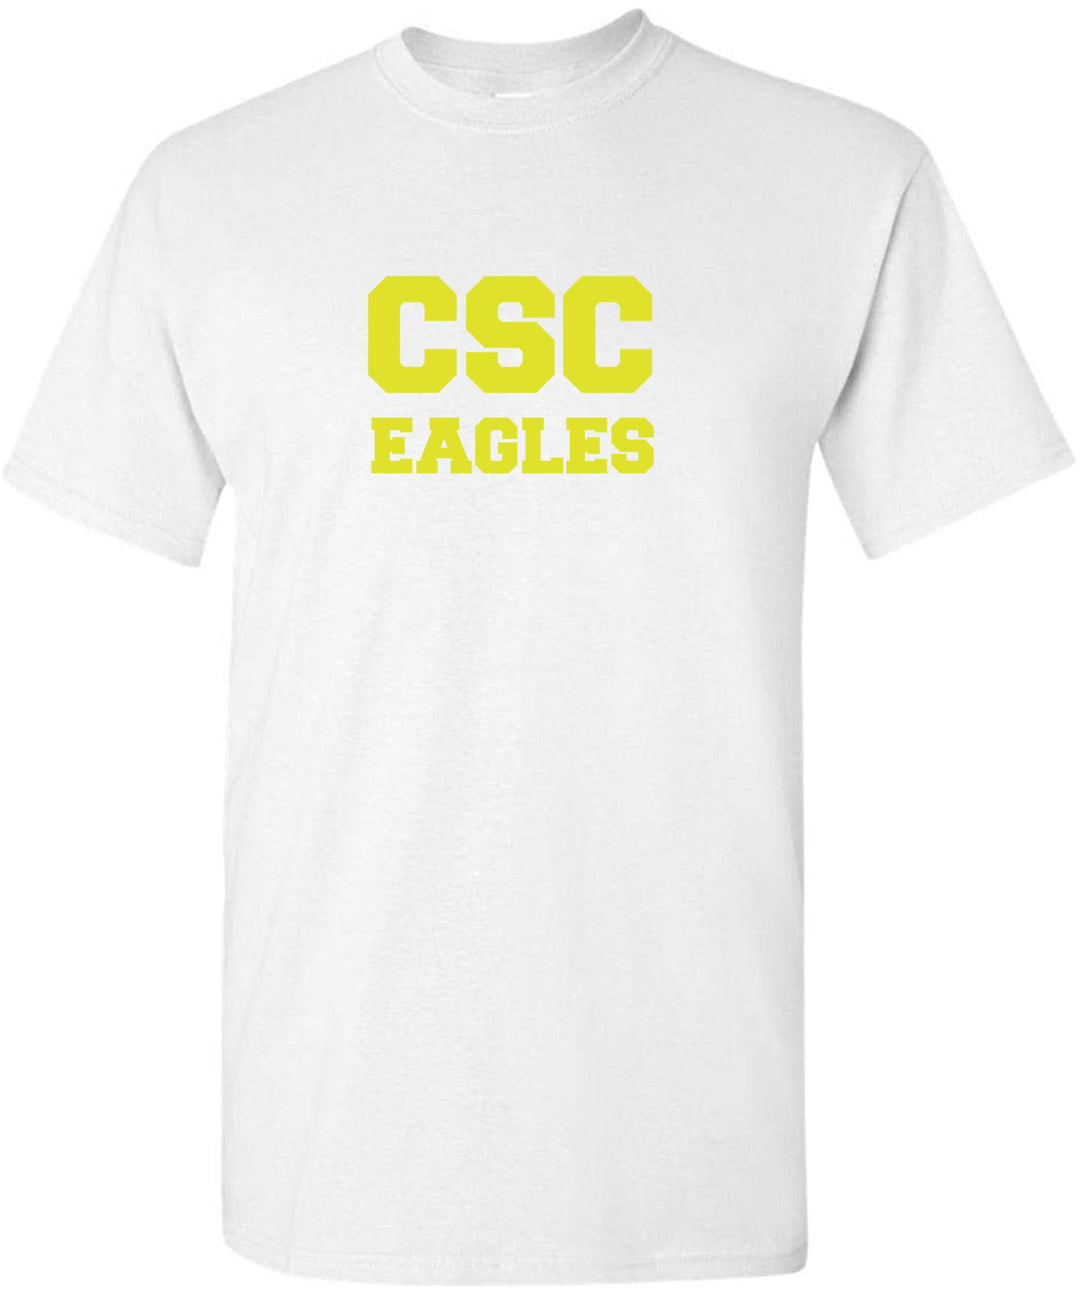 CSC Short-Sleeve T-Shirt Calcasieu Soccer Club MENS EXTRA LARGE BLACK - Third Coast Soccer